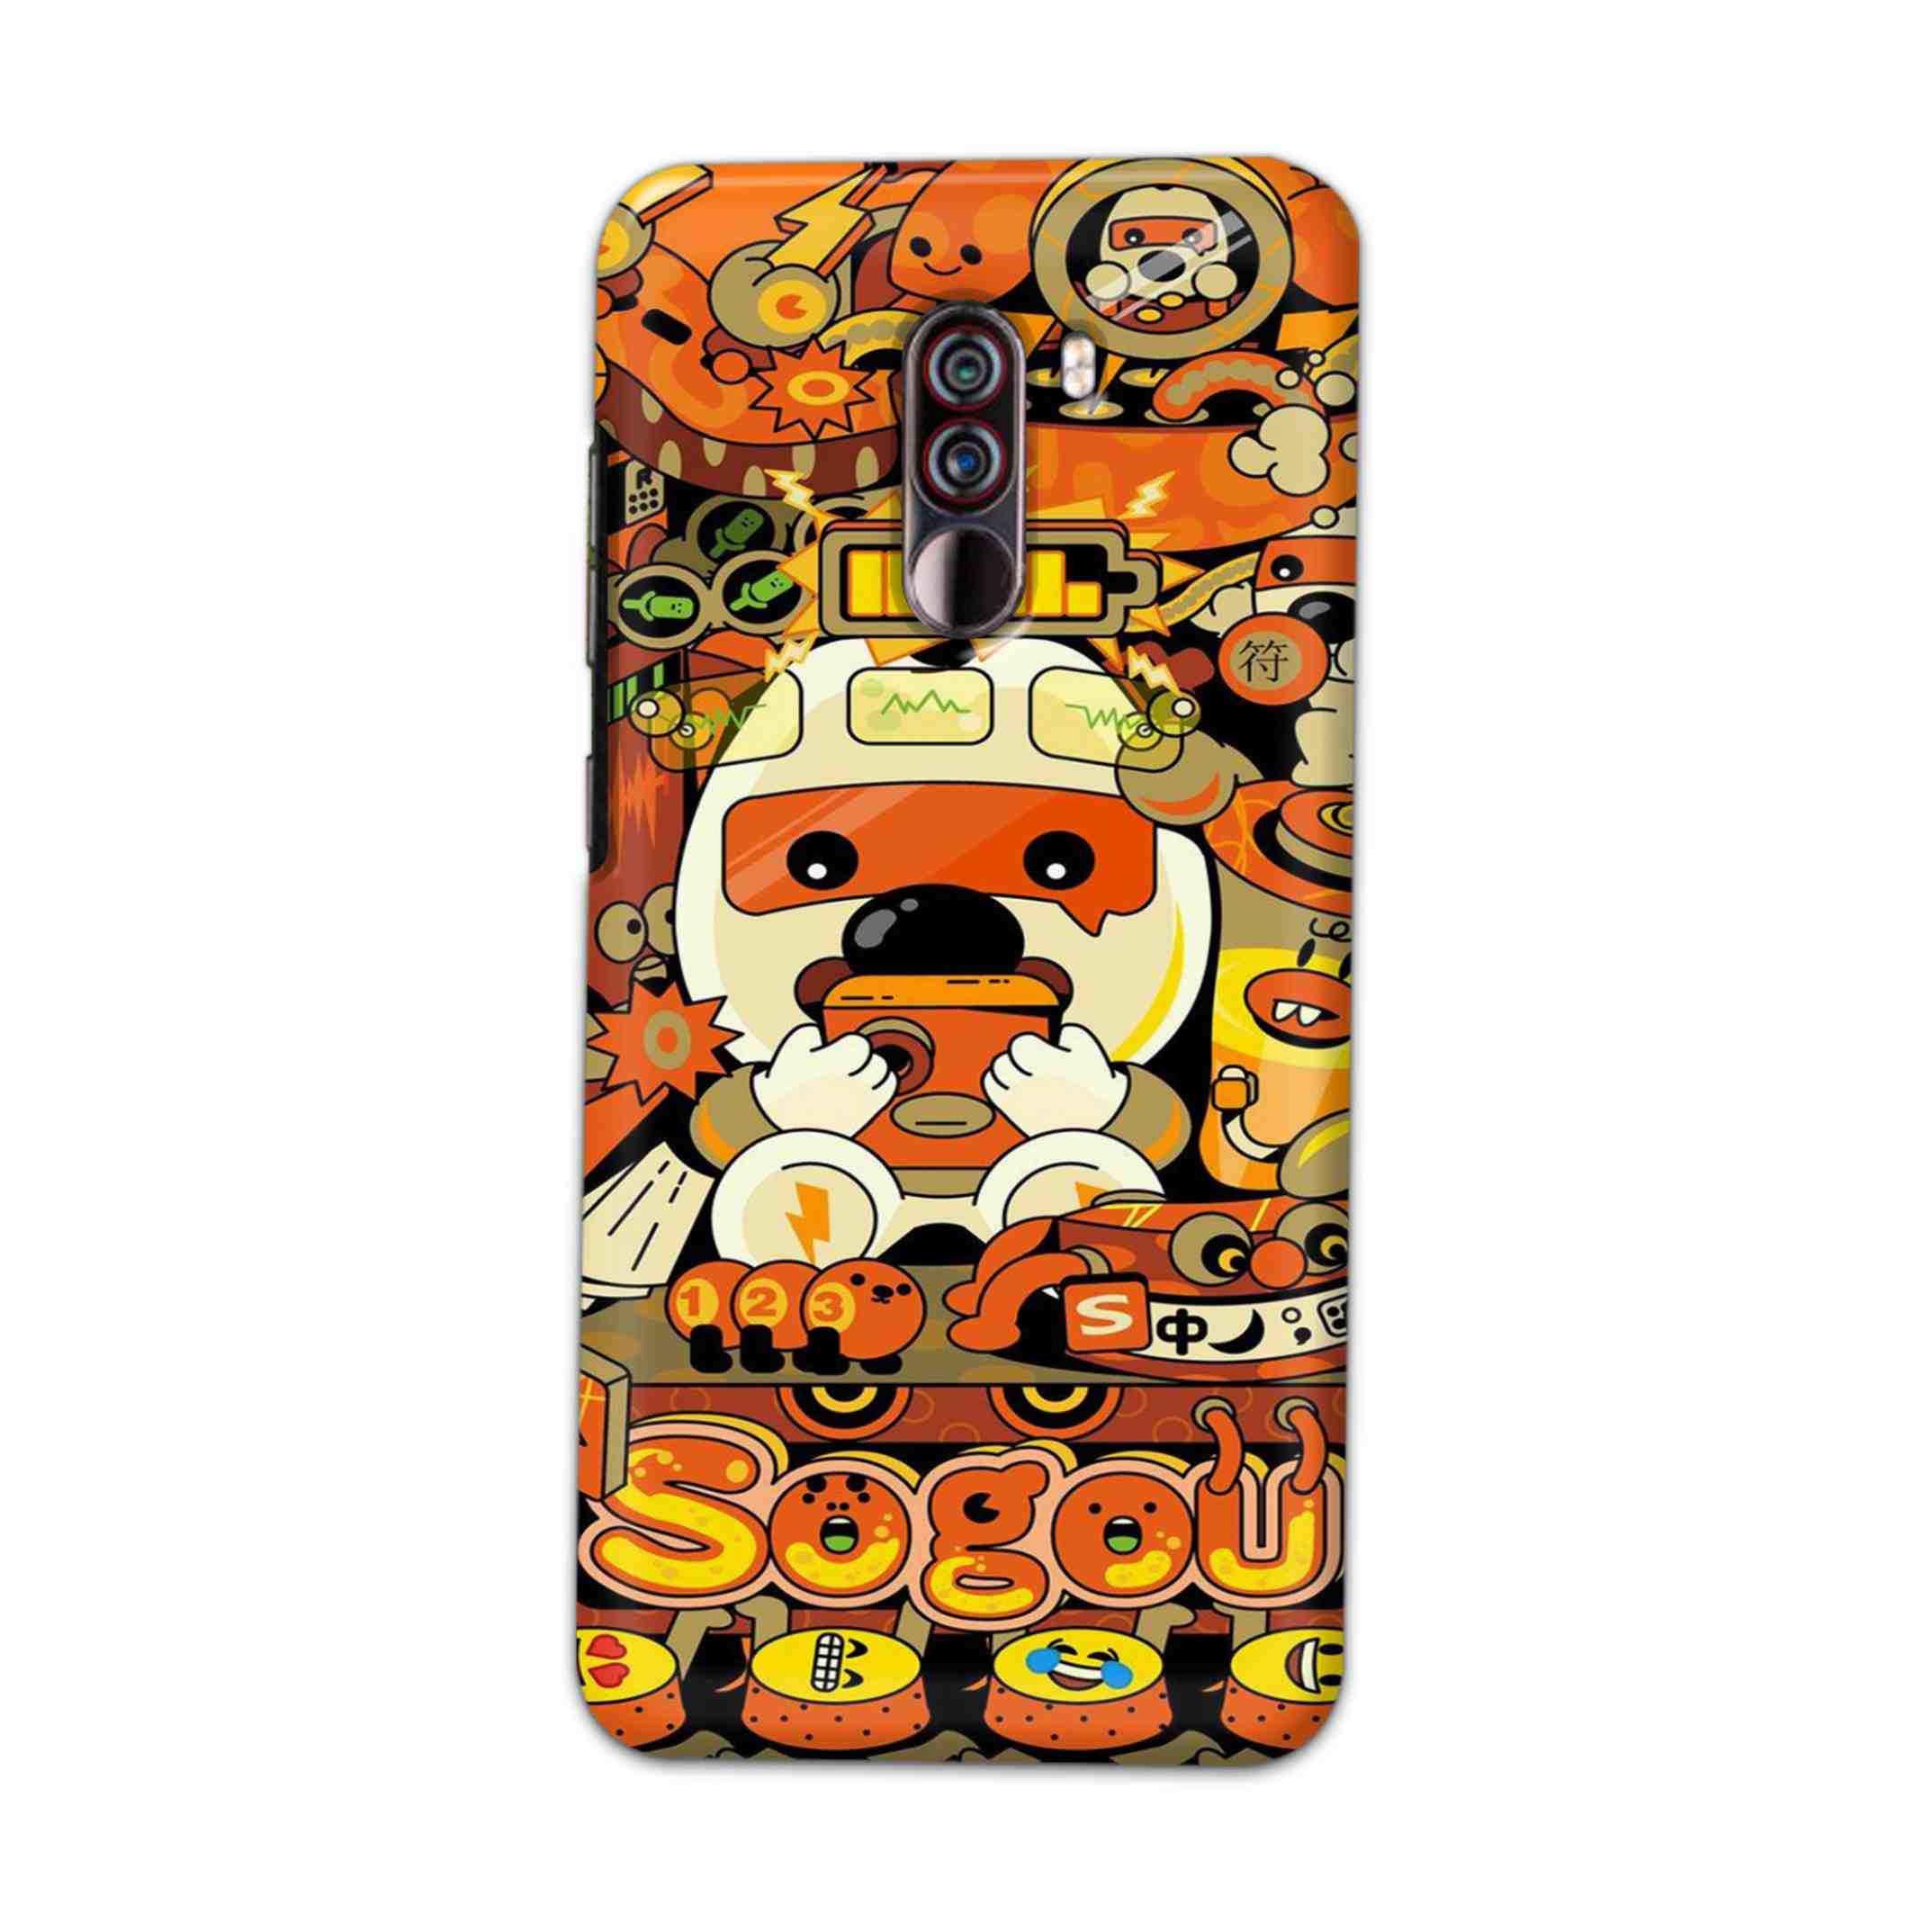 Buy Sogou Hard Back Mobile Phone Case Cover For Xiaomi Pocophone F1 Online